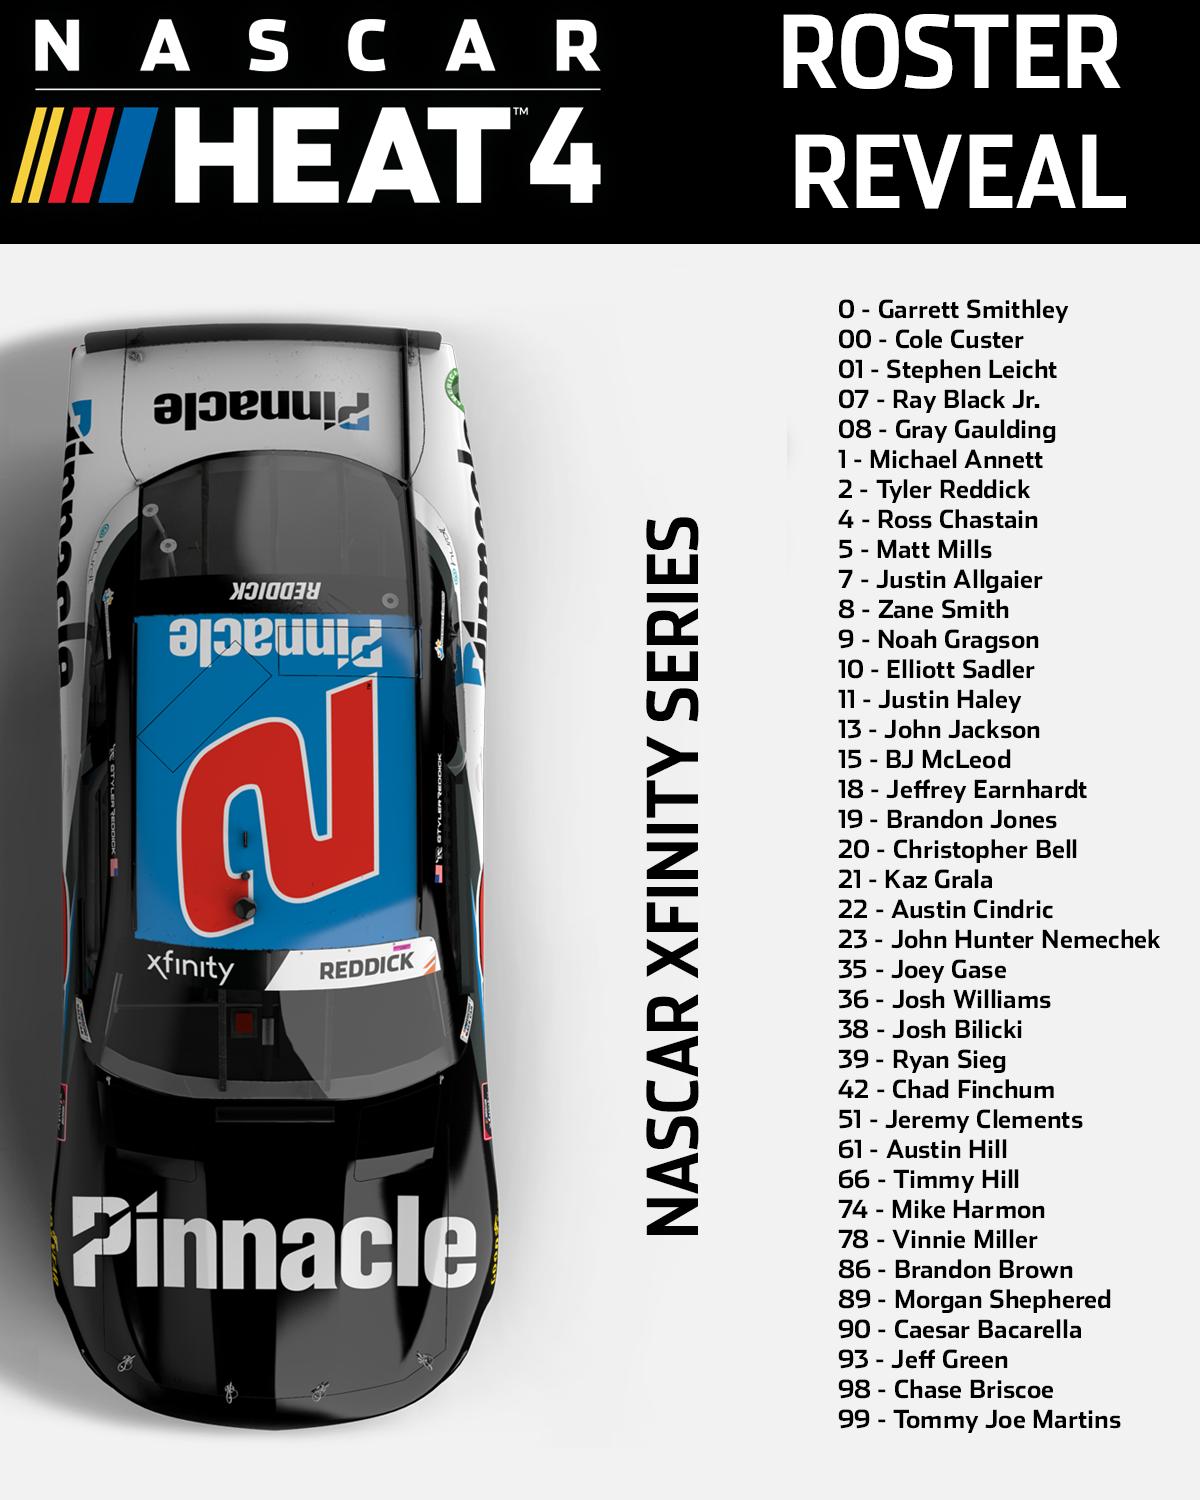 Nascar Heat 4 Xfinity Series Roster.jpg